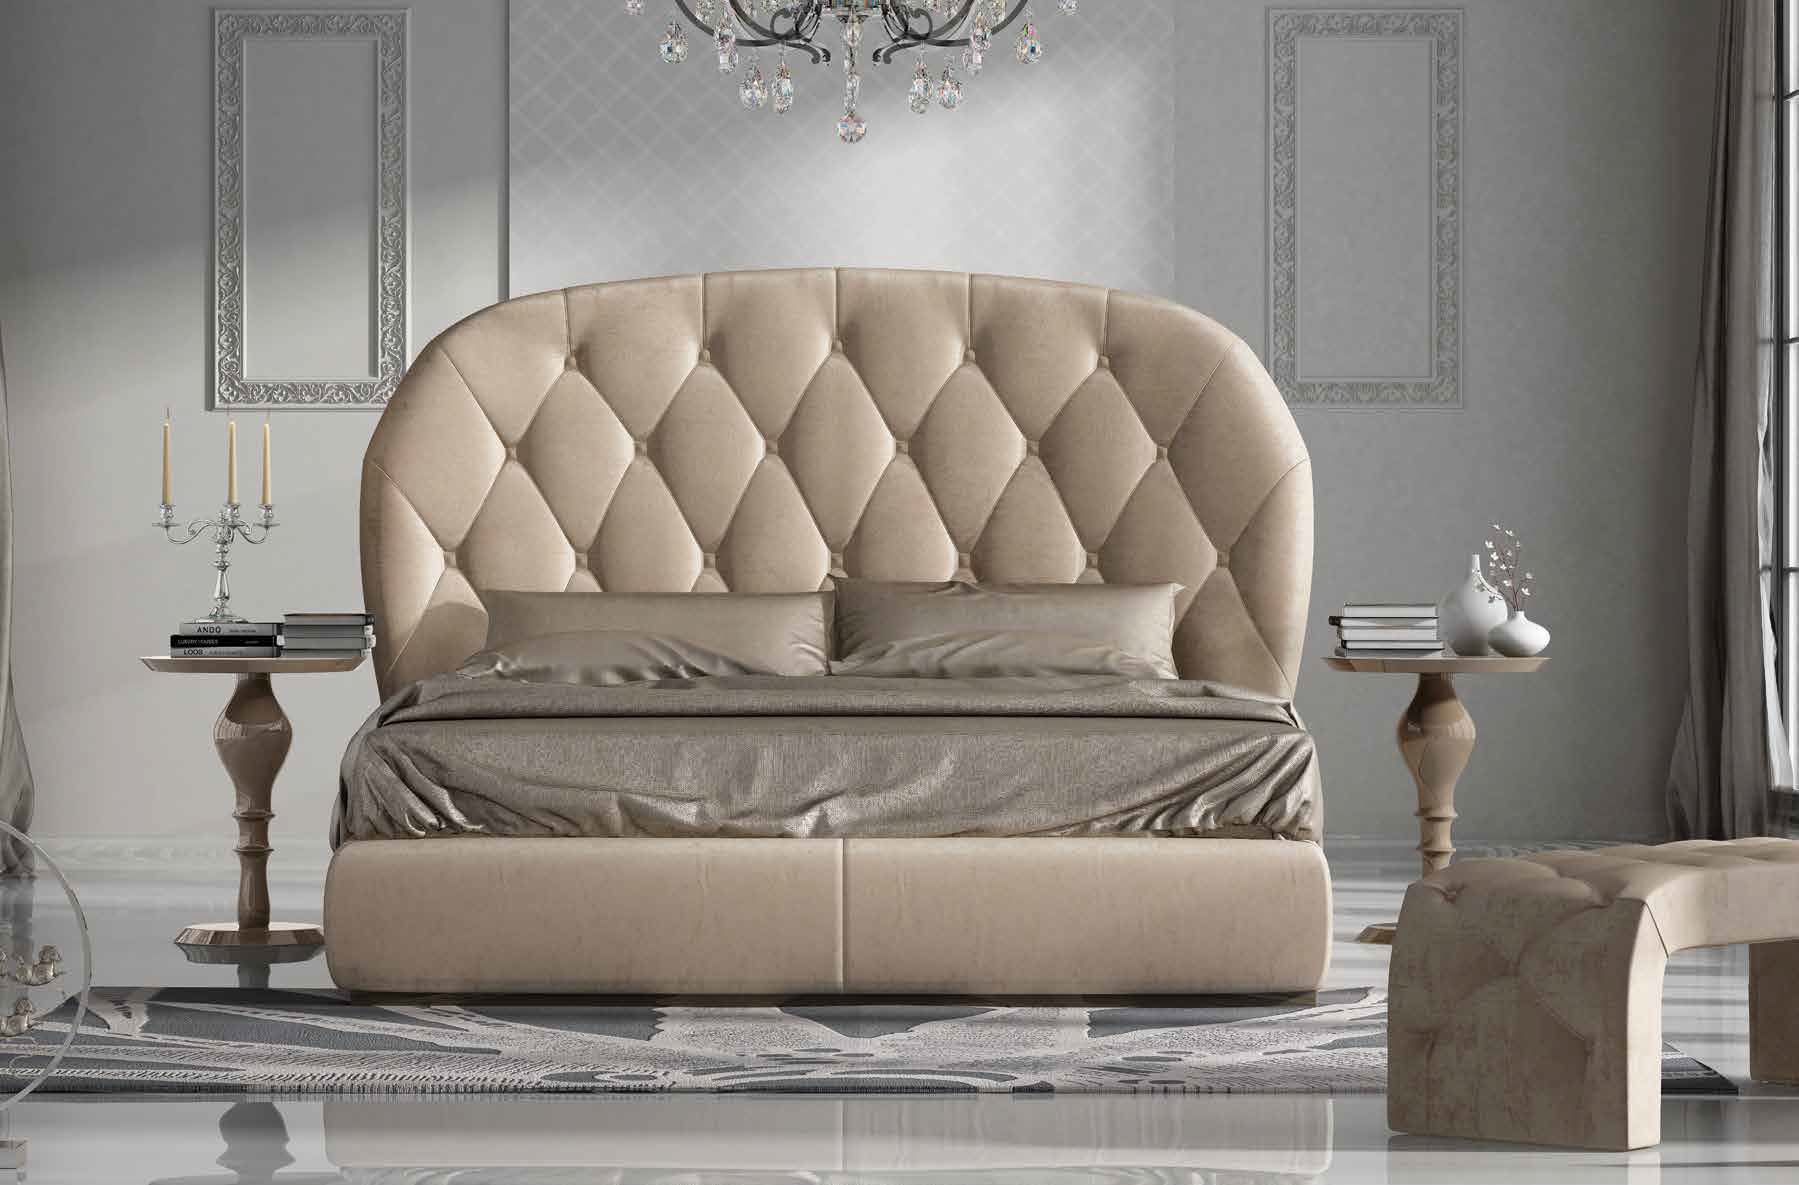 Brands Franco Furniture Bedrooms vol1, Spain DOR 77